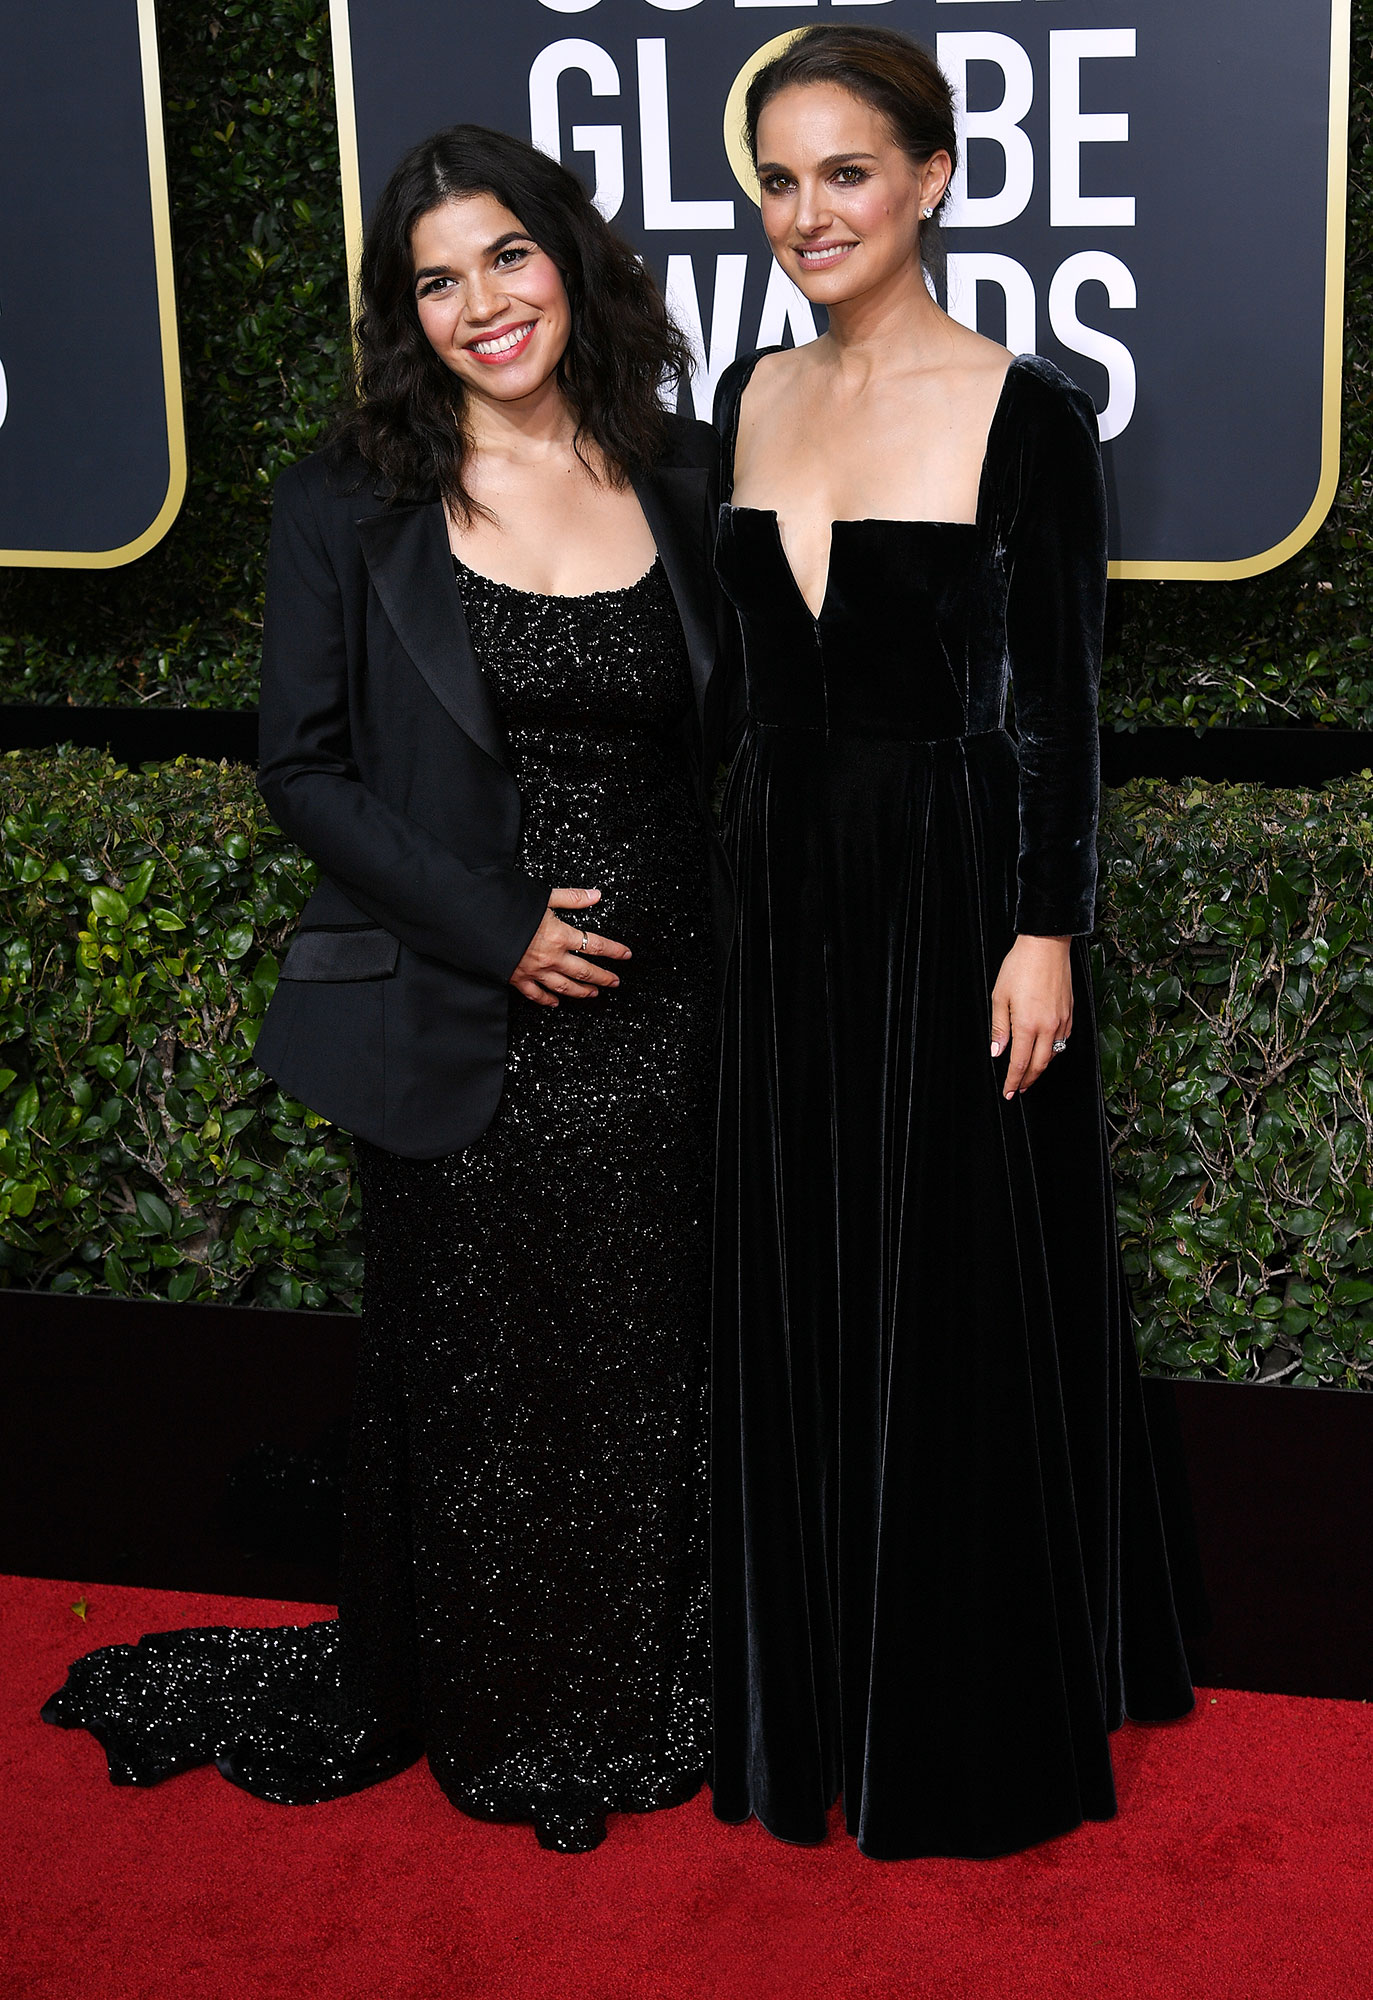 America Ferrera and Natalie Portman America Ferrera Baby Bumps at the Golden Globes